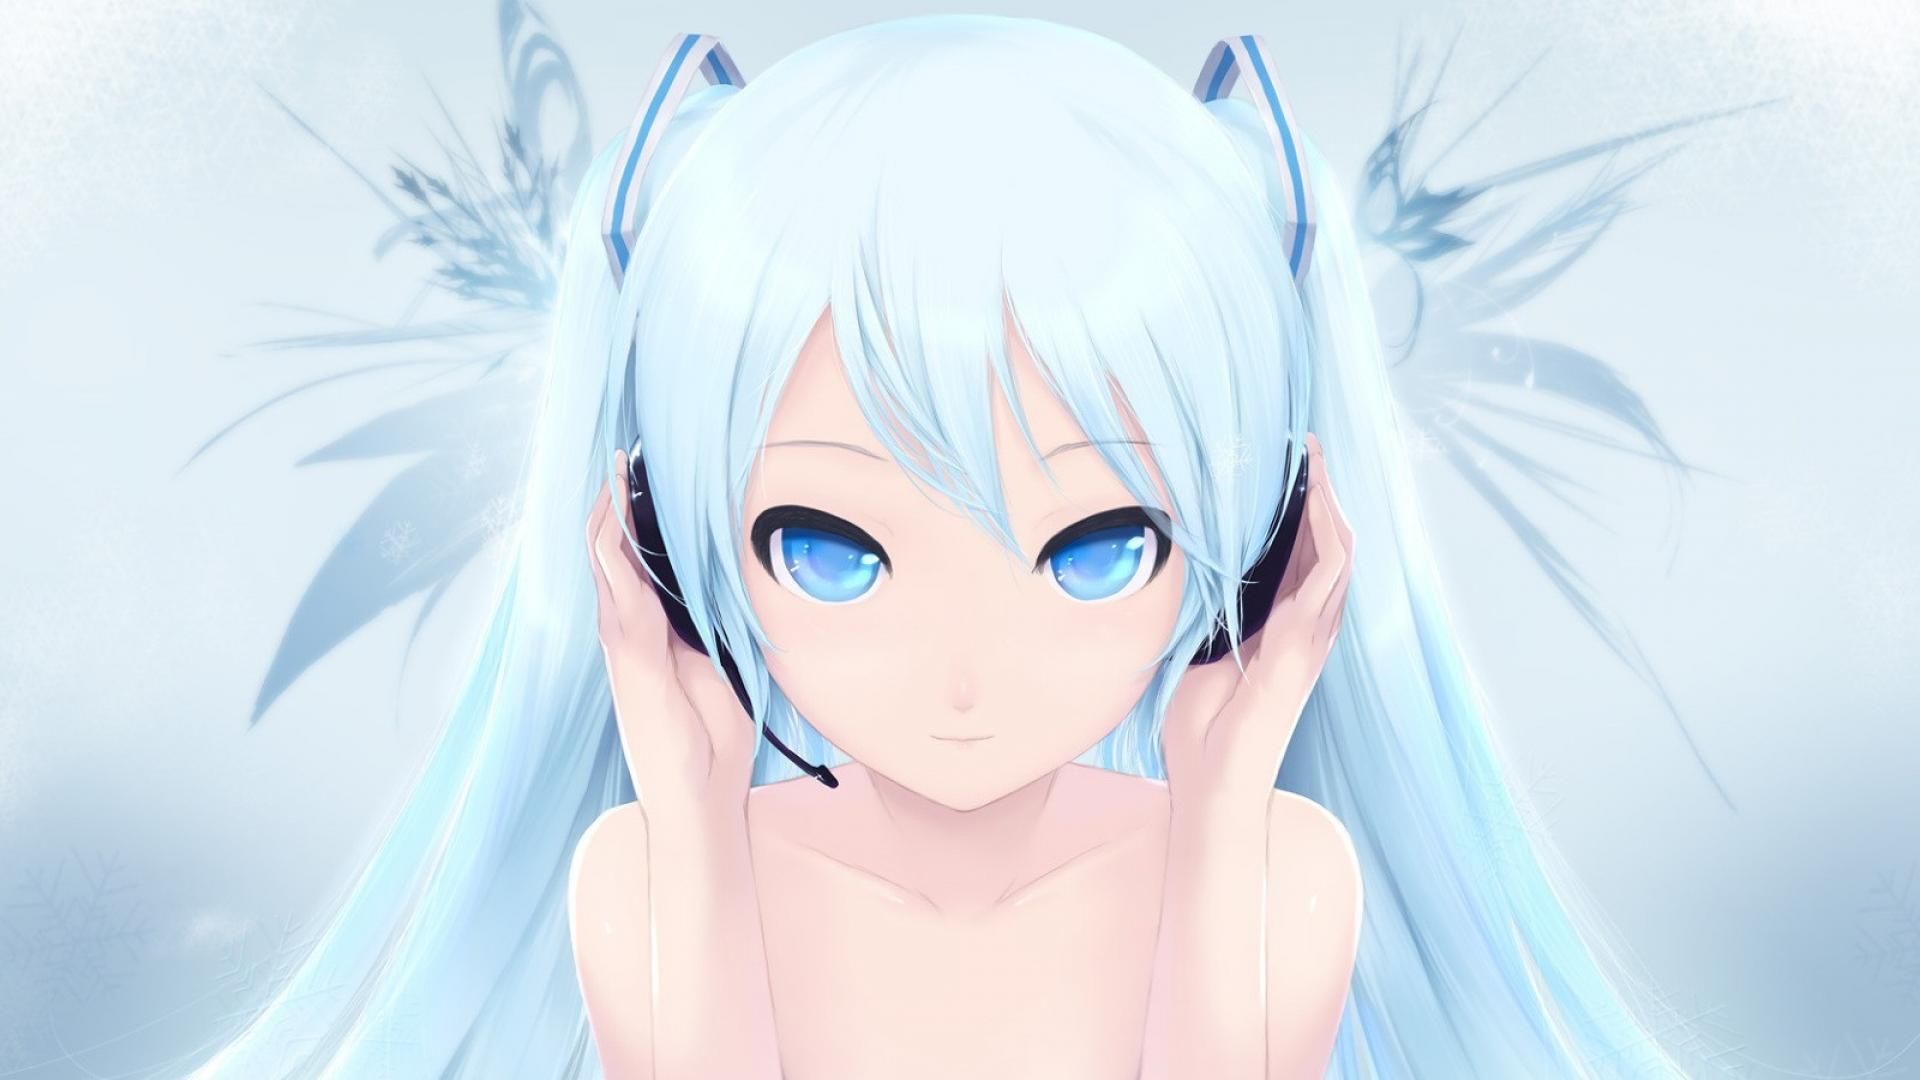 Anime 3D Girl With Blue Hair .wallpapertip.com